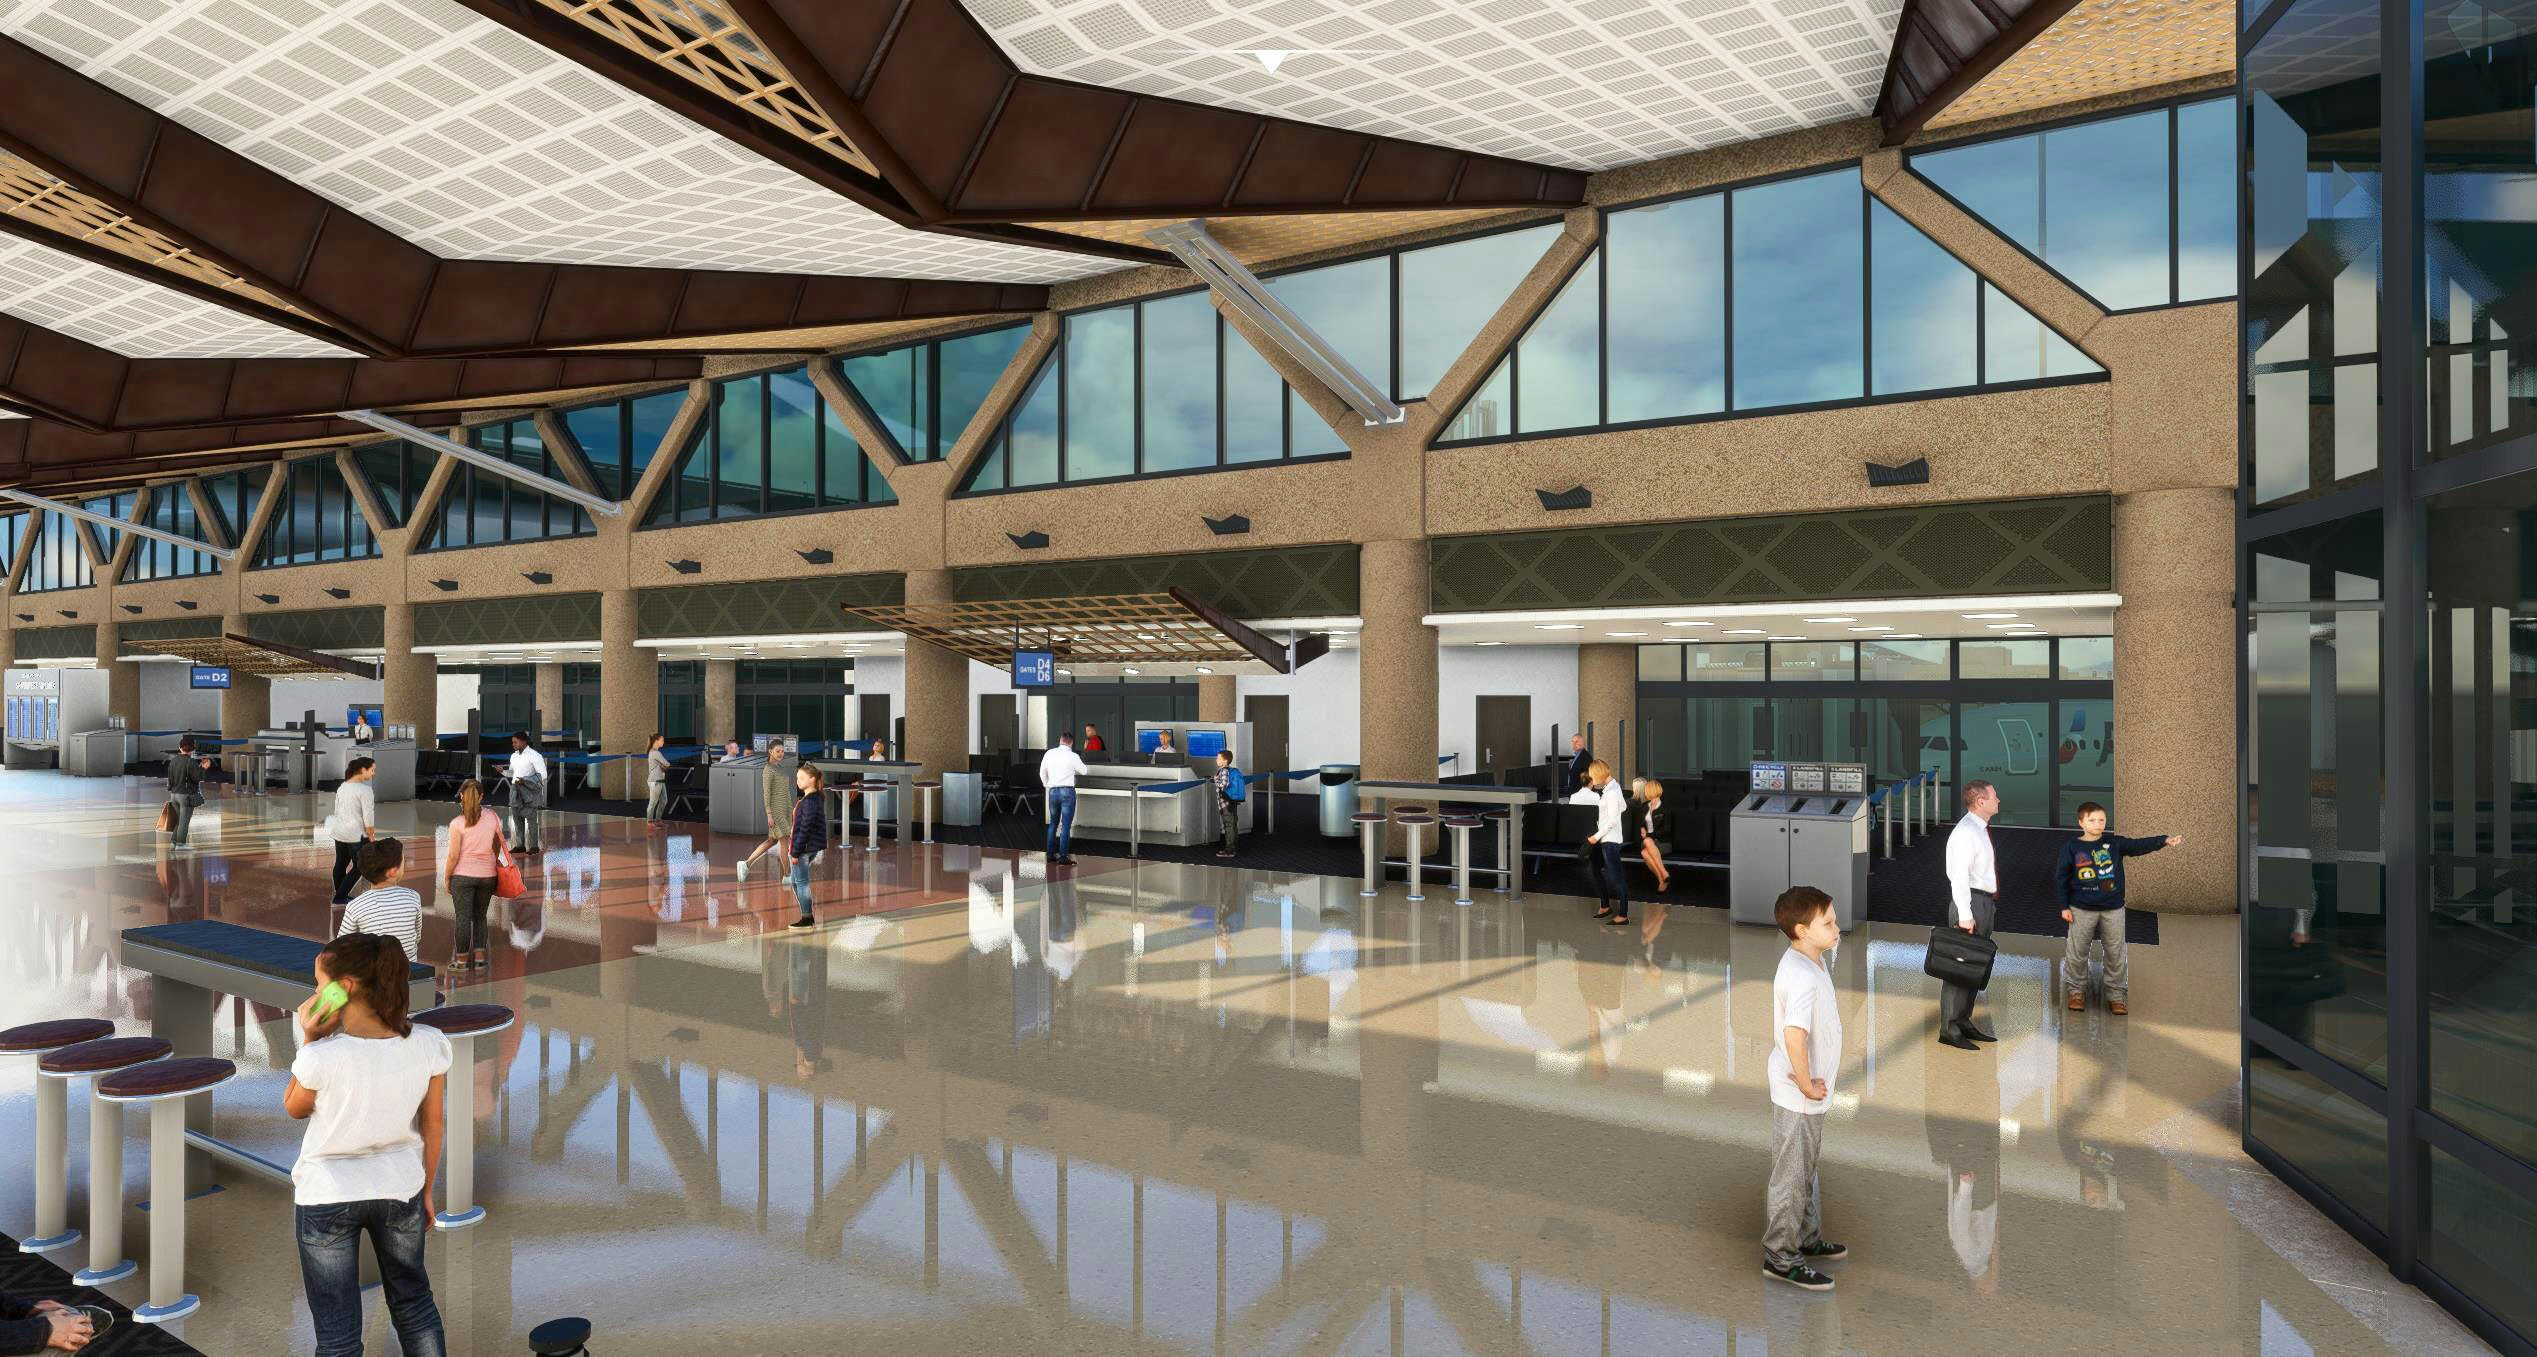 BMWorld/AmSim Release Phoenix Sky Harbor Airport for MSFS